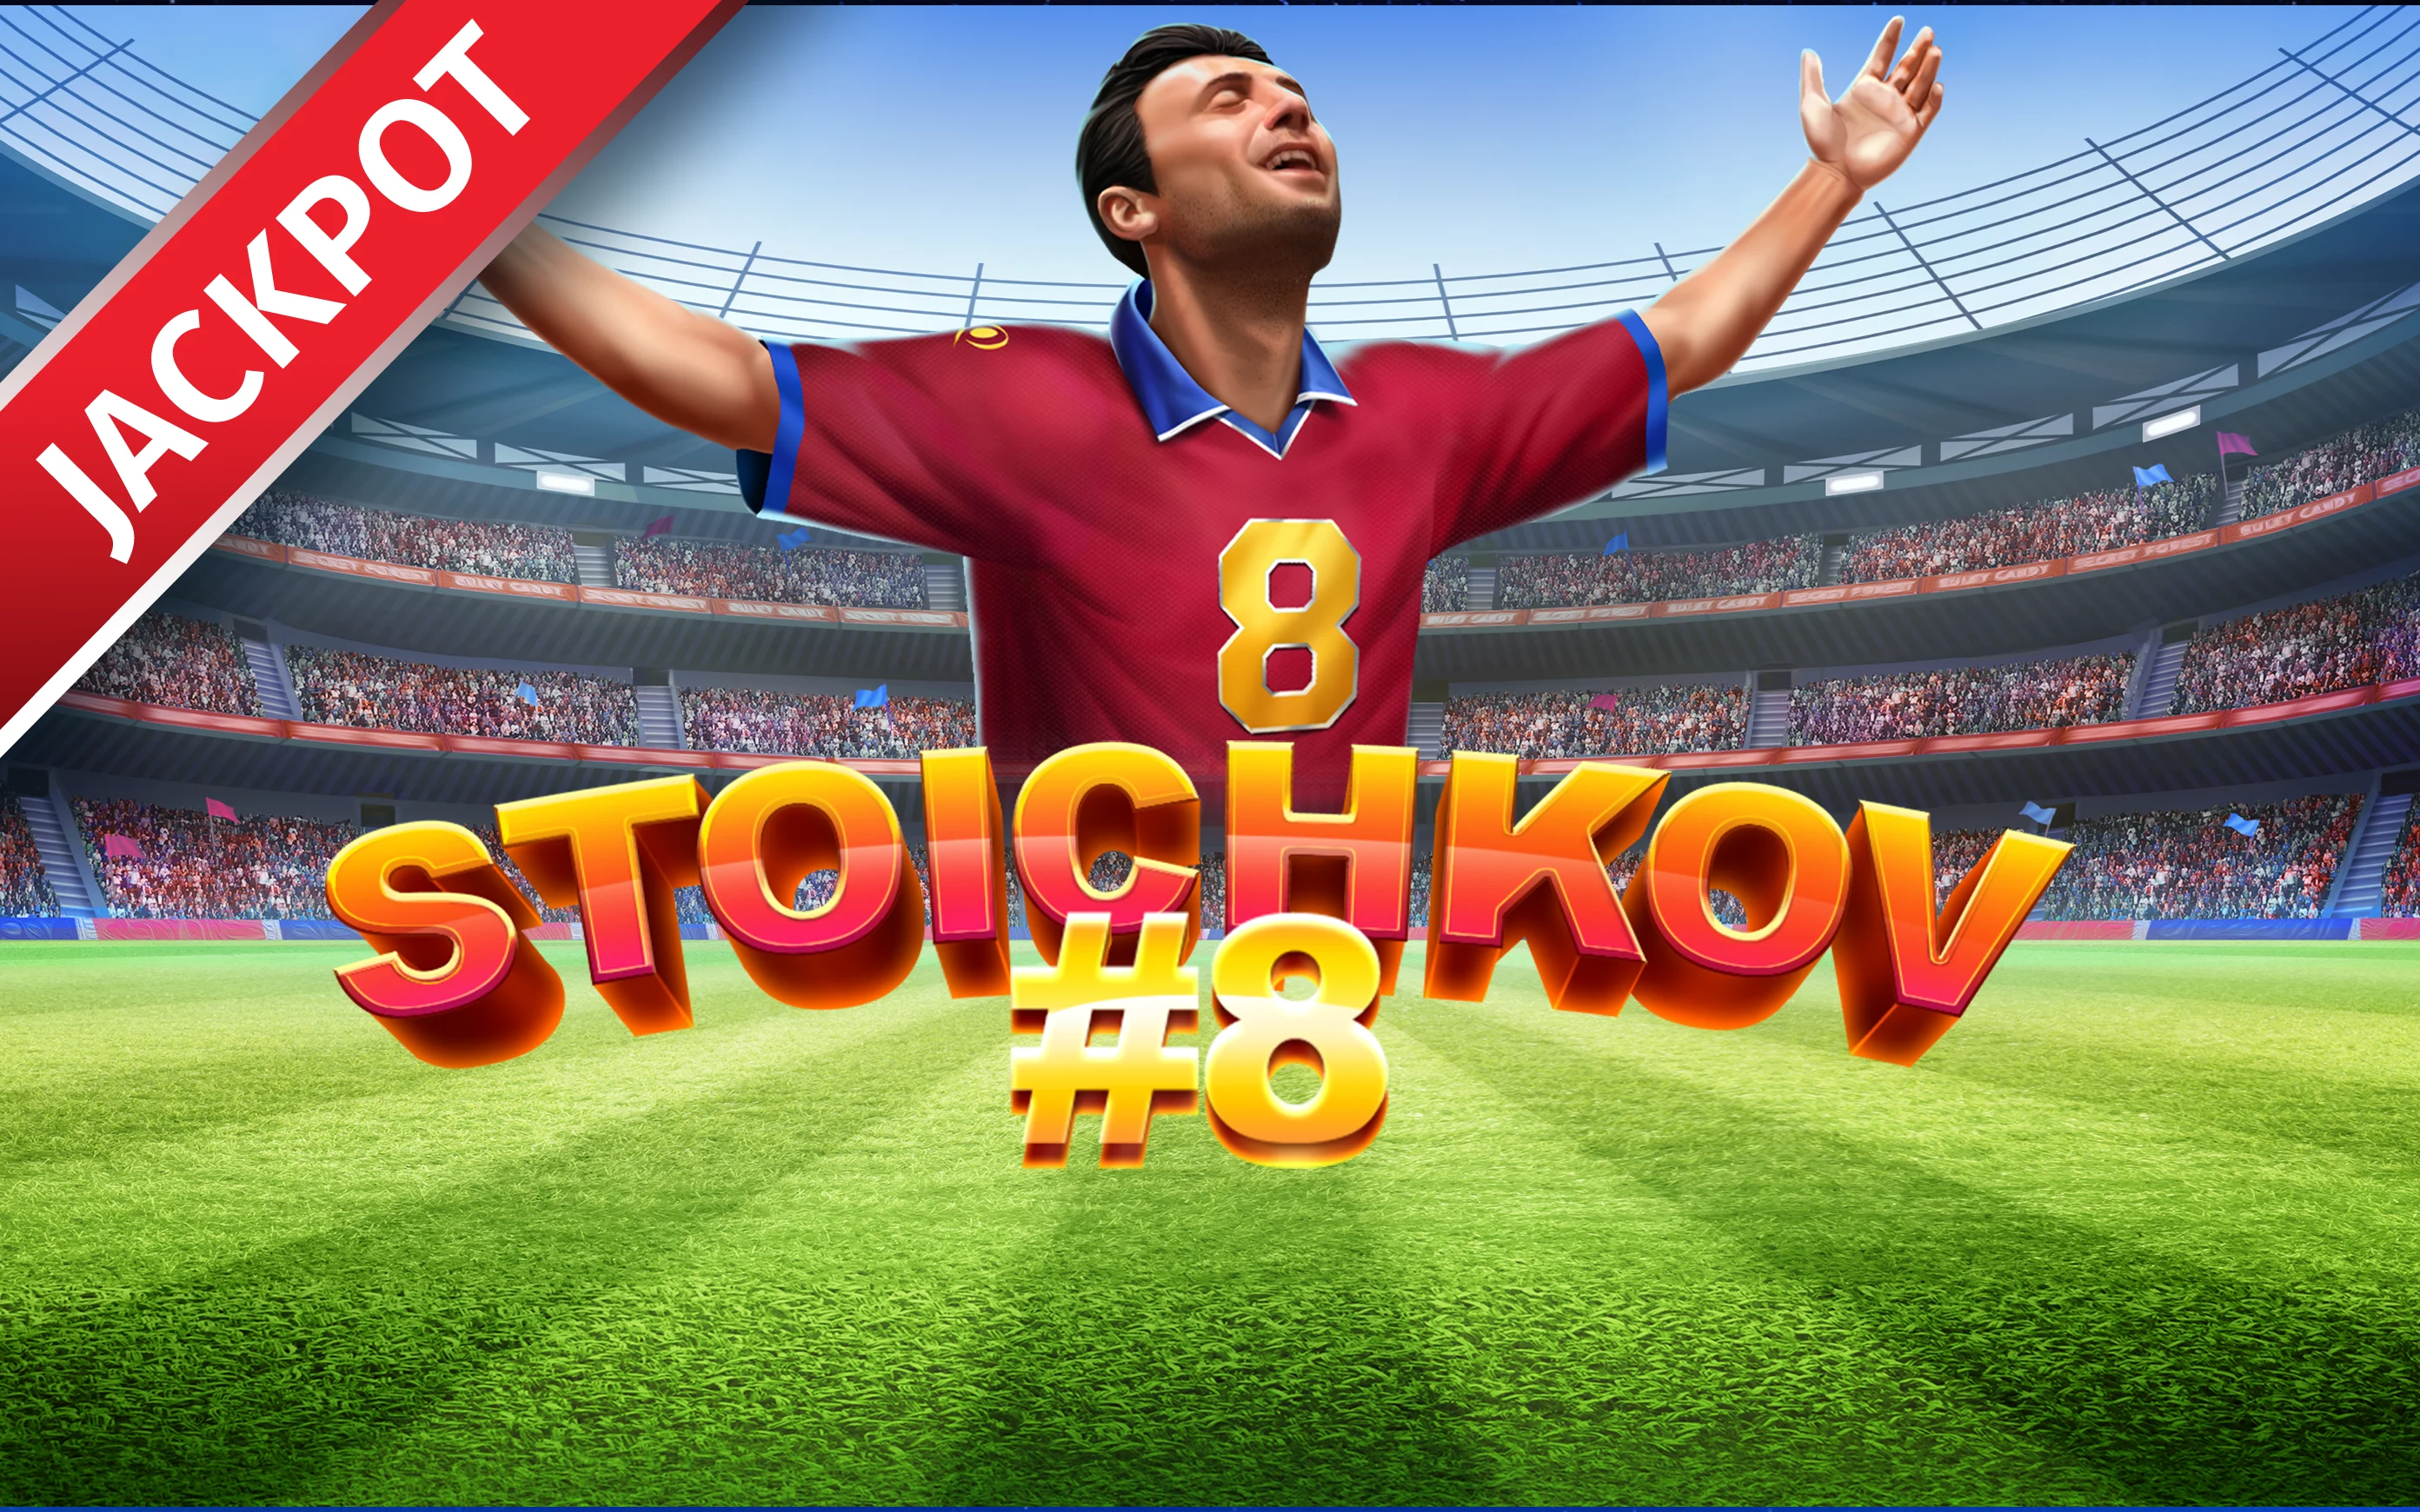 Play Stoichkov #8 on Starcasino.be online casino